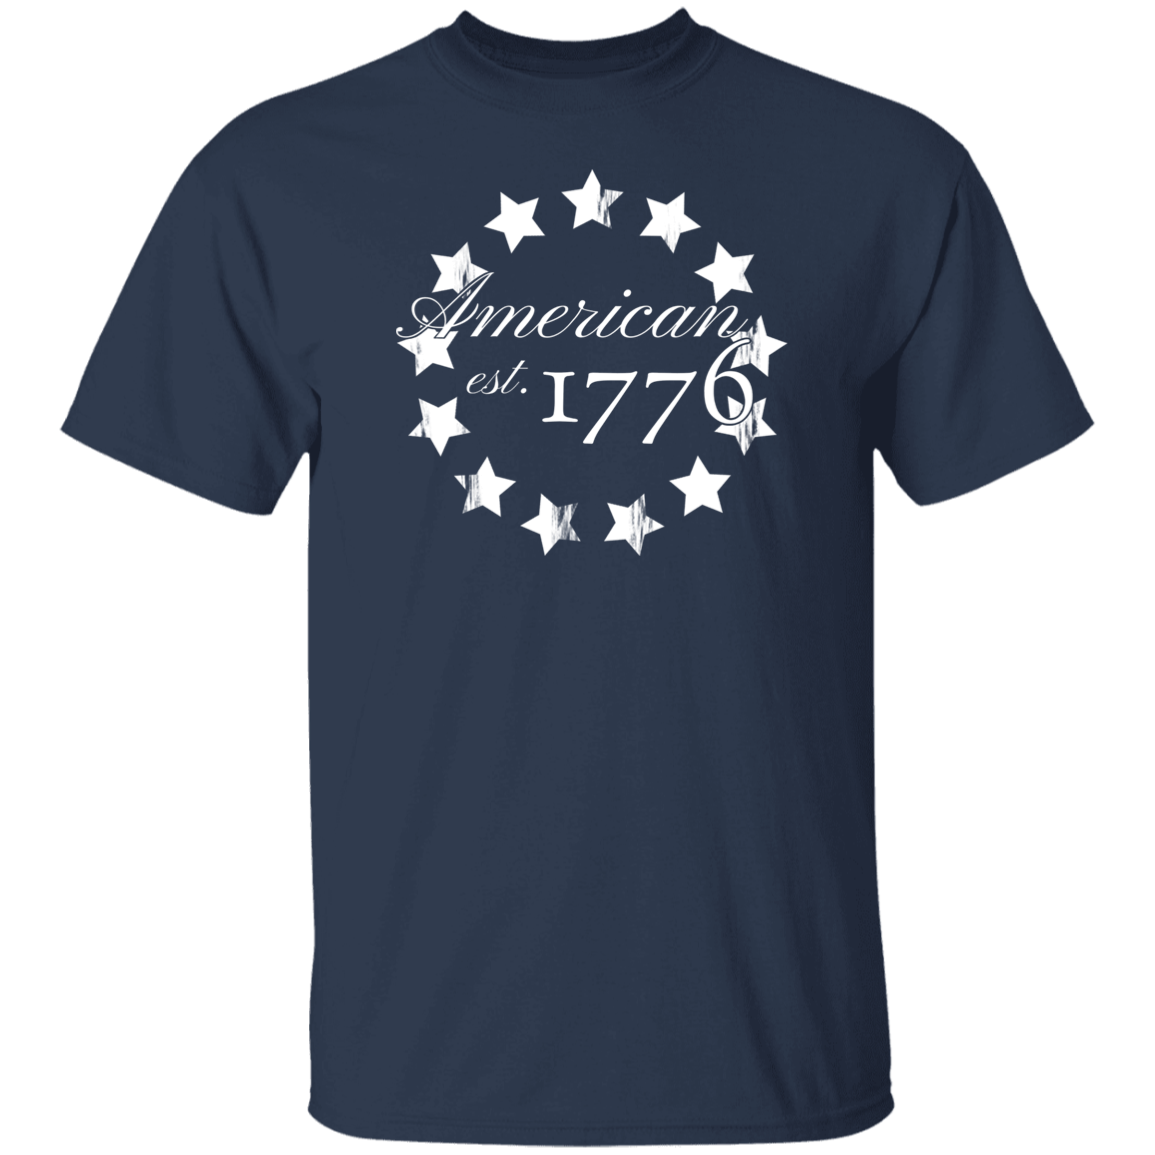 American est 1776 T Shirt - Unisex